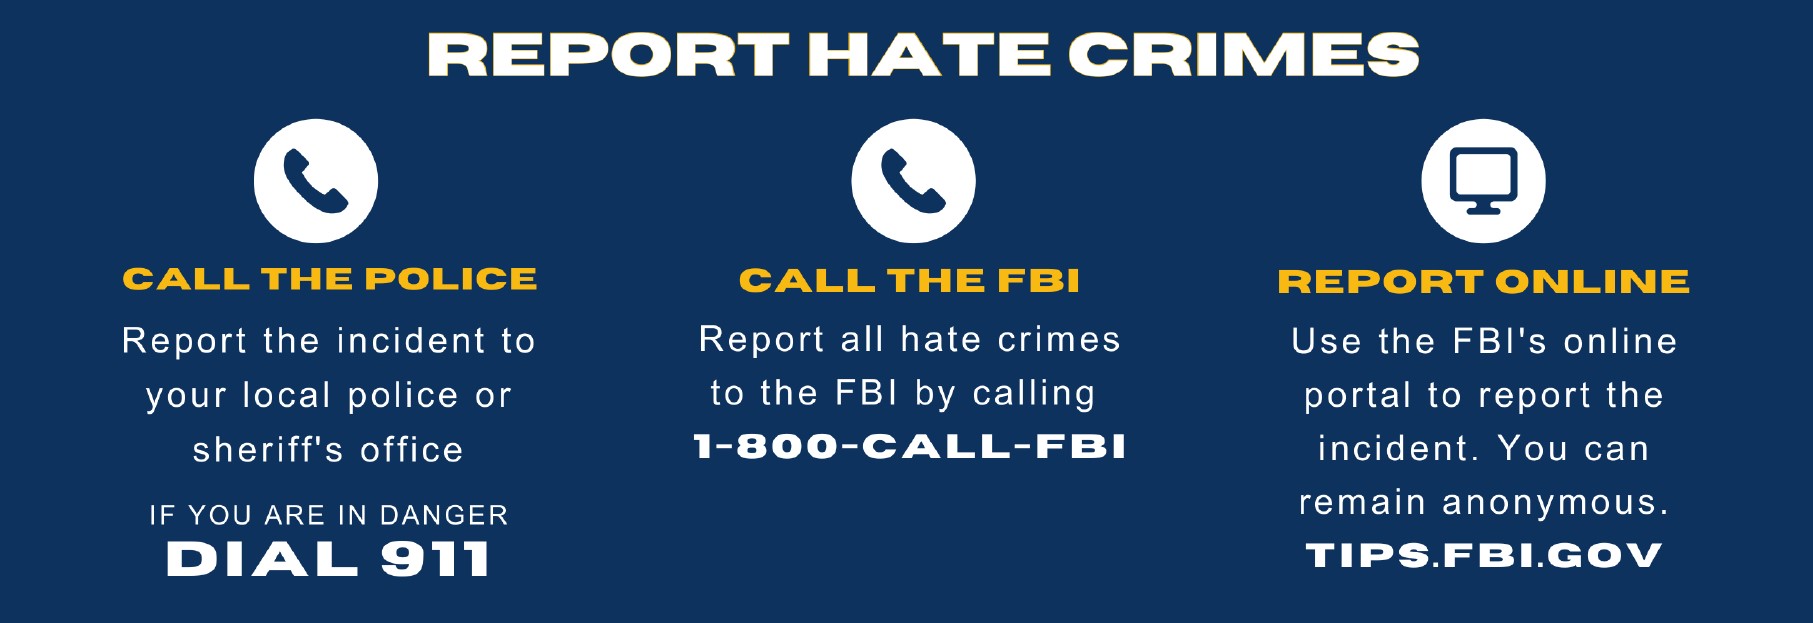 Report Hate Crimes 1-800-CALL-FBI